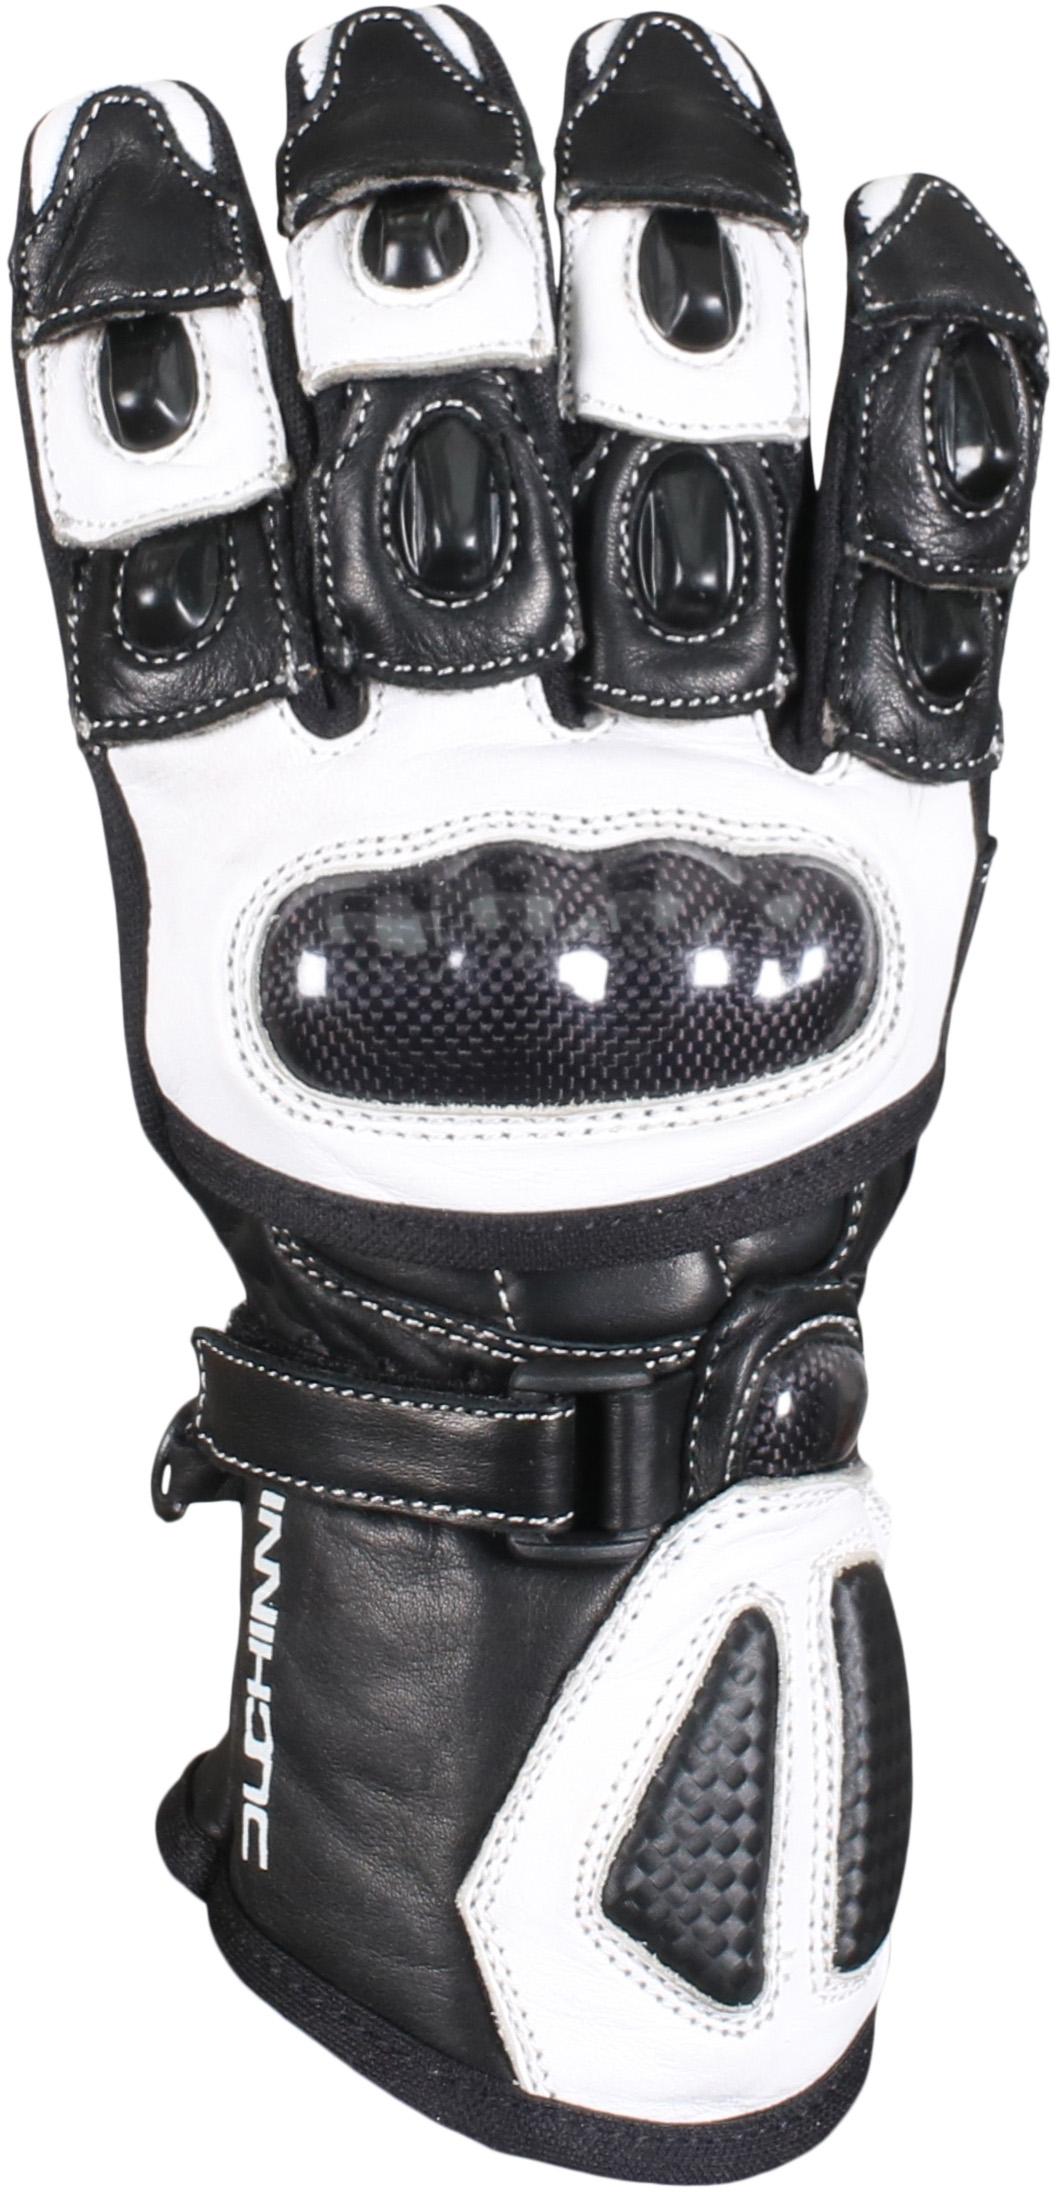 Duchinni Bambino Youth Motorcycle Gloves - Black And White, M